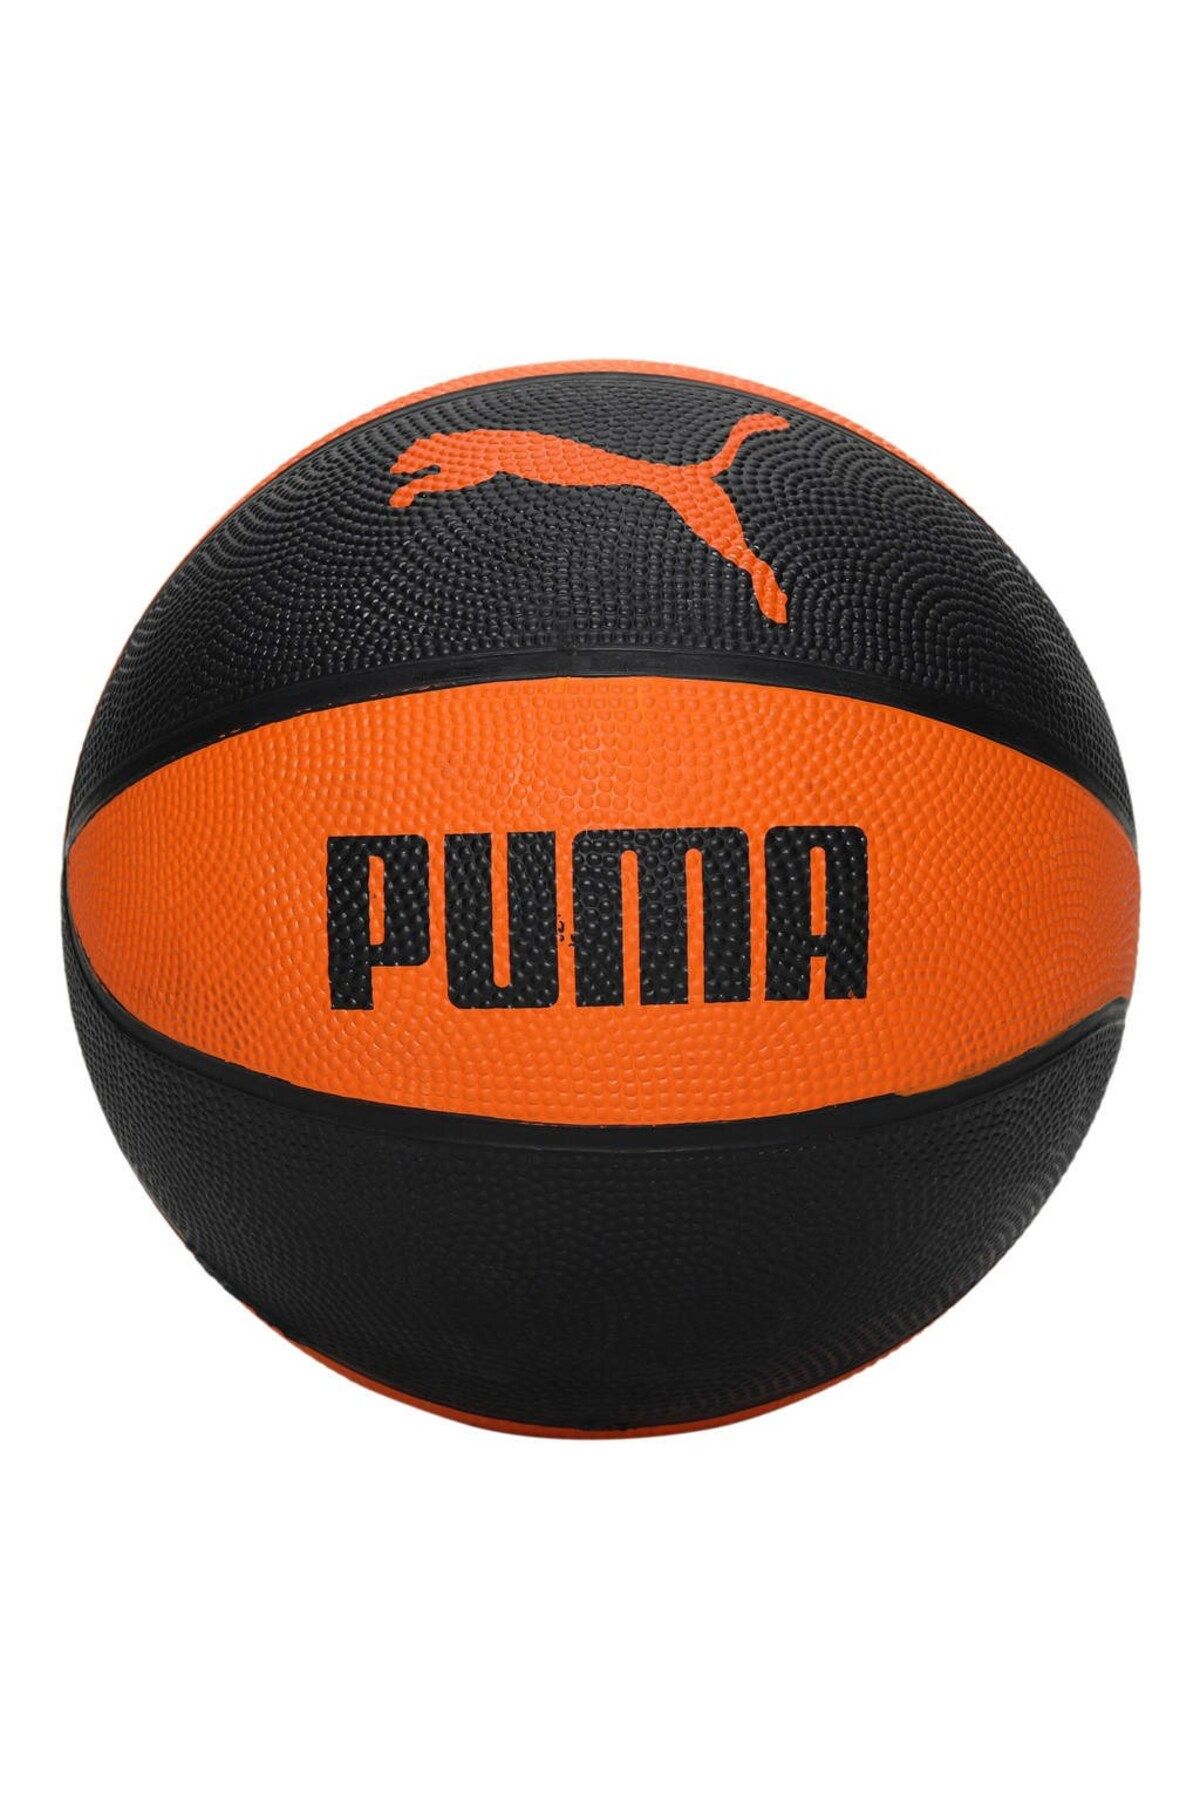 Puma Basketbol Topu Indoor Basketbol Topu